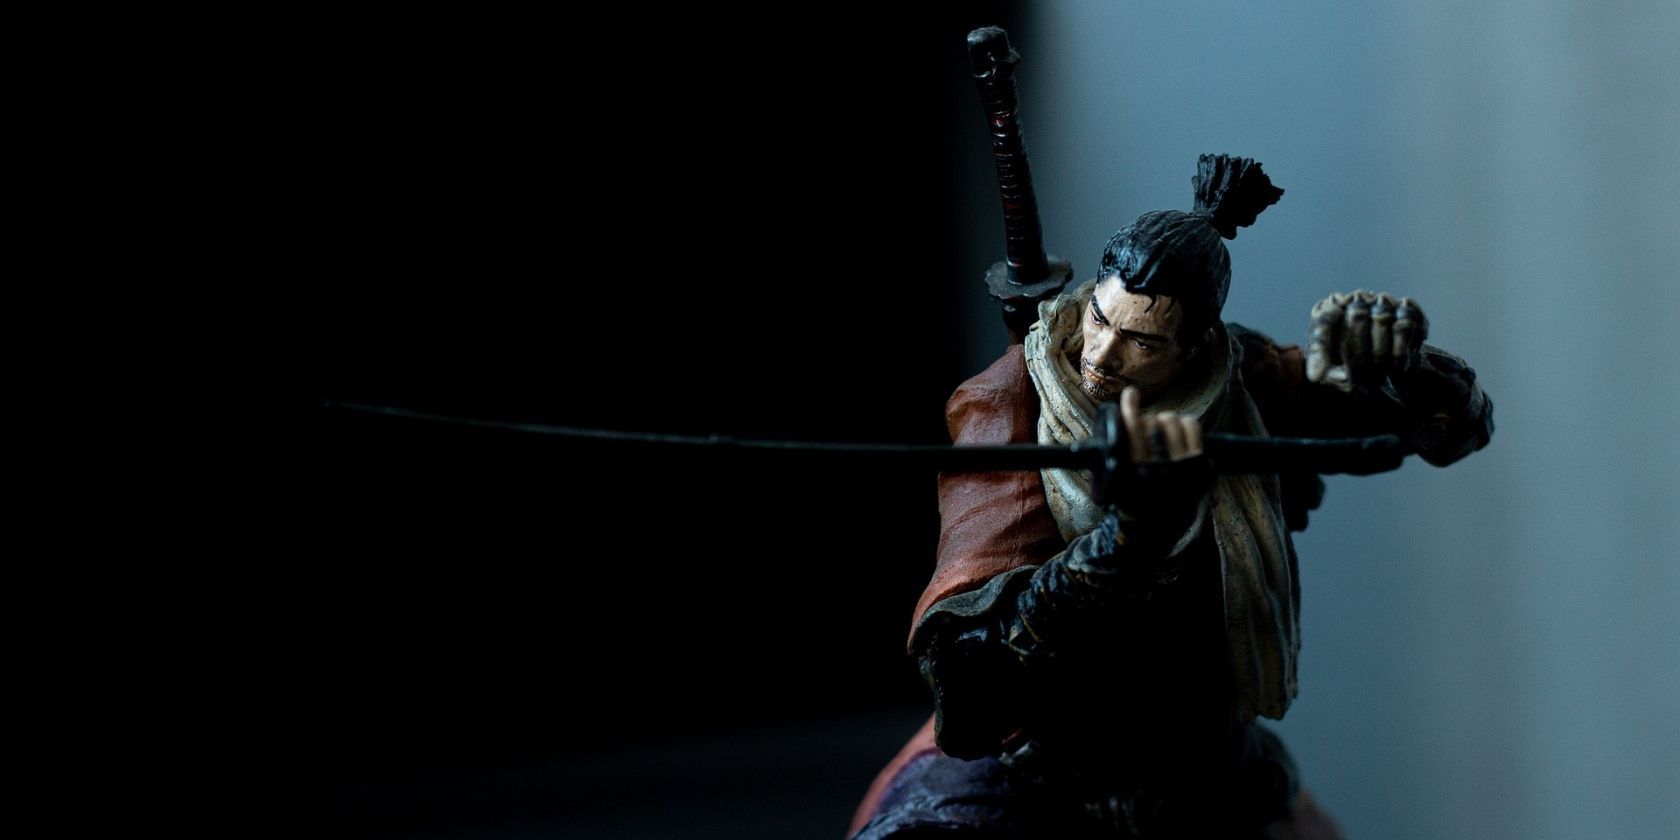 A Samurai figurine with a black background.